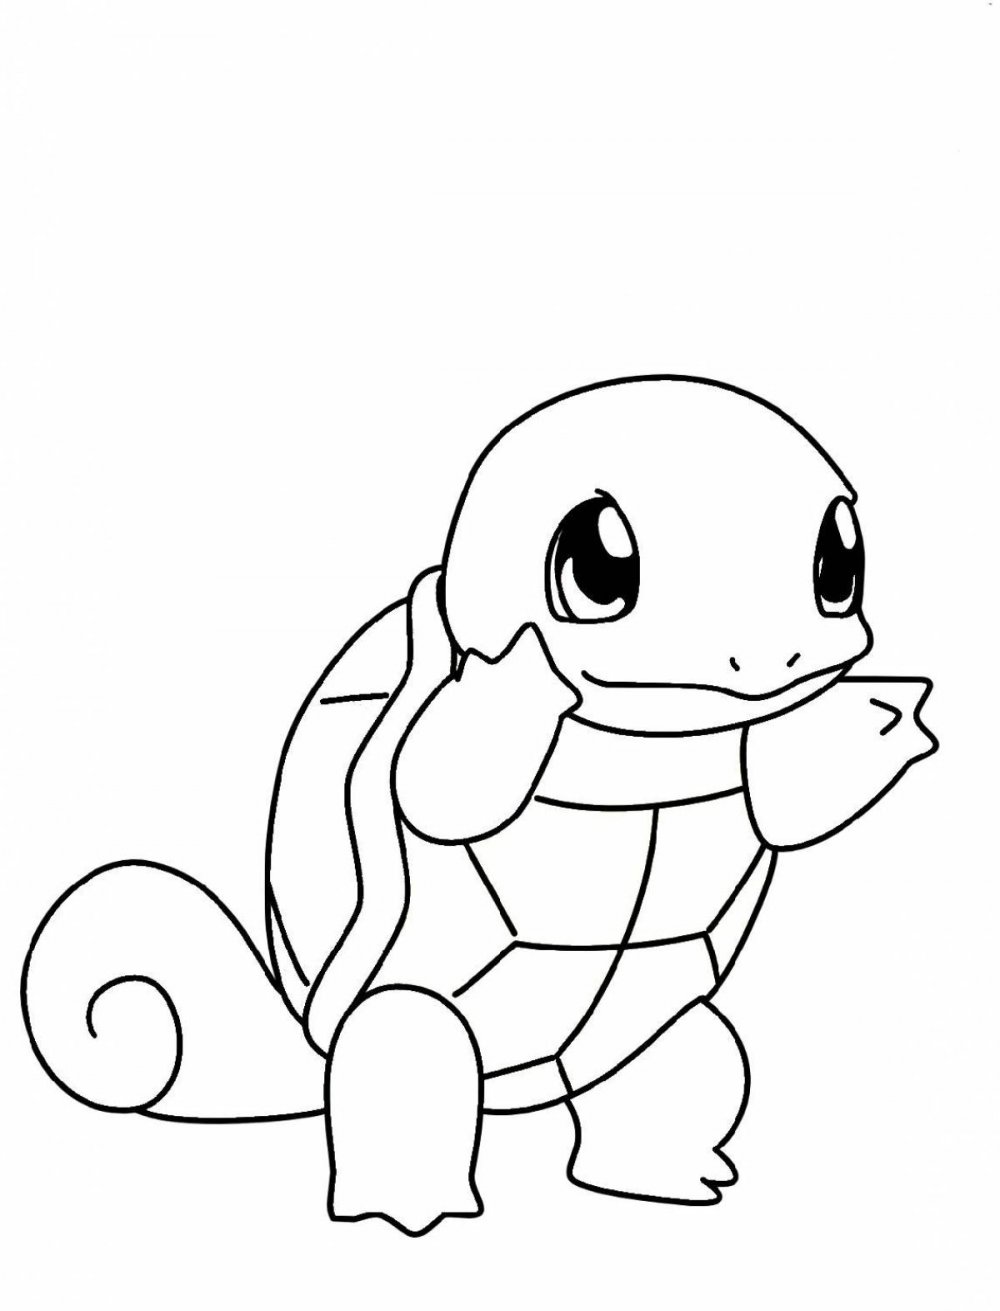 Раскраска покемон черепаха